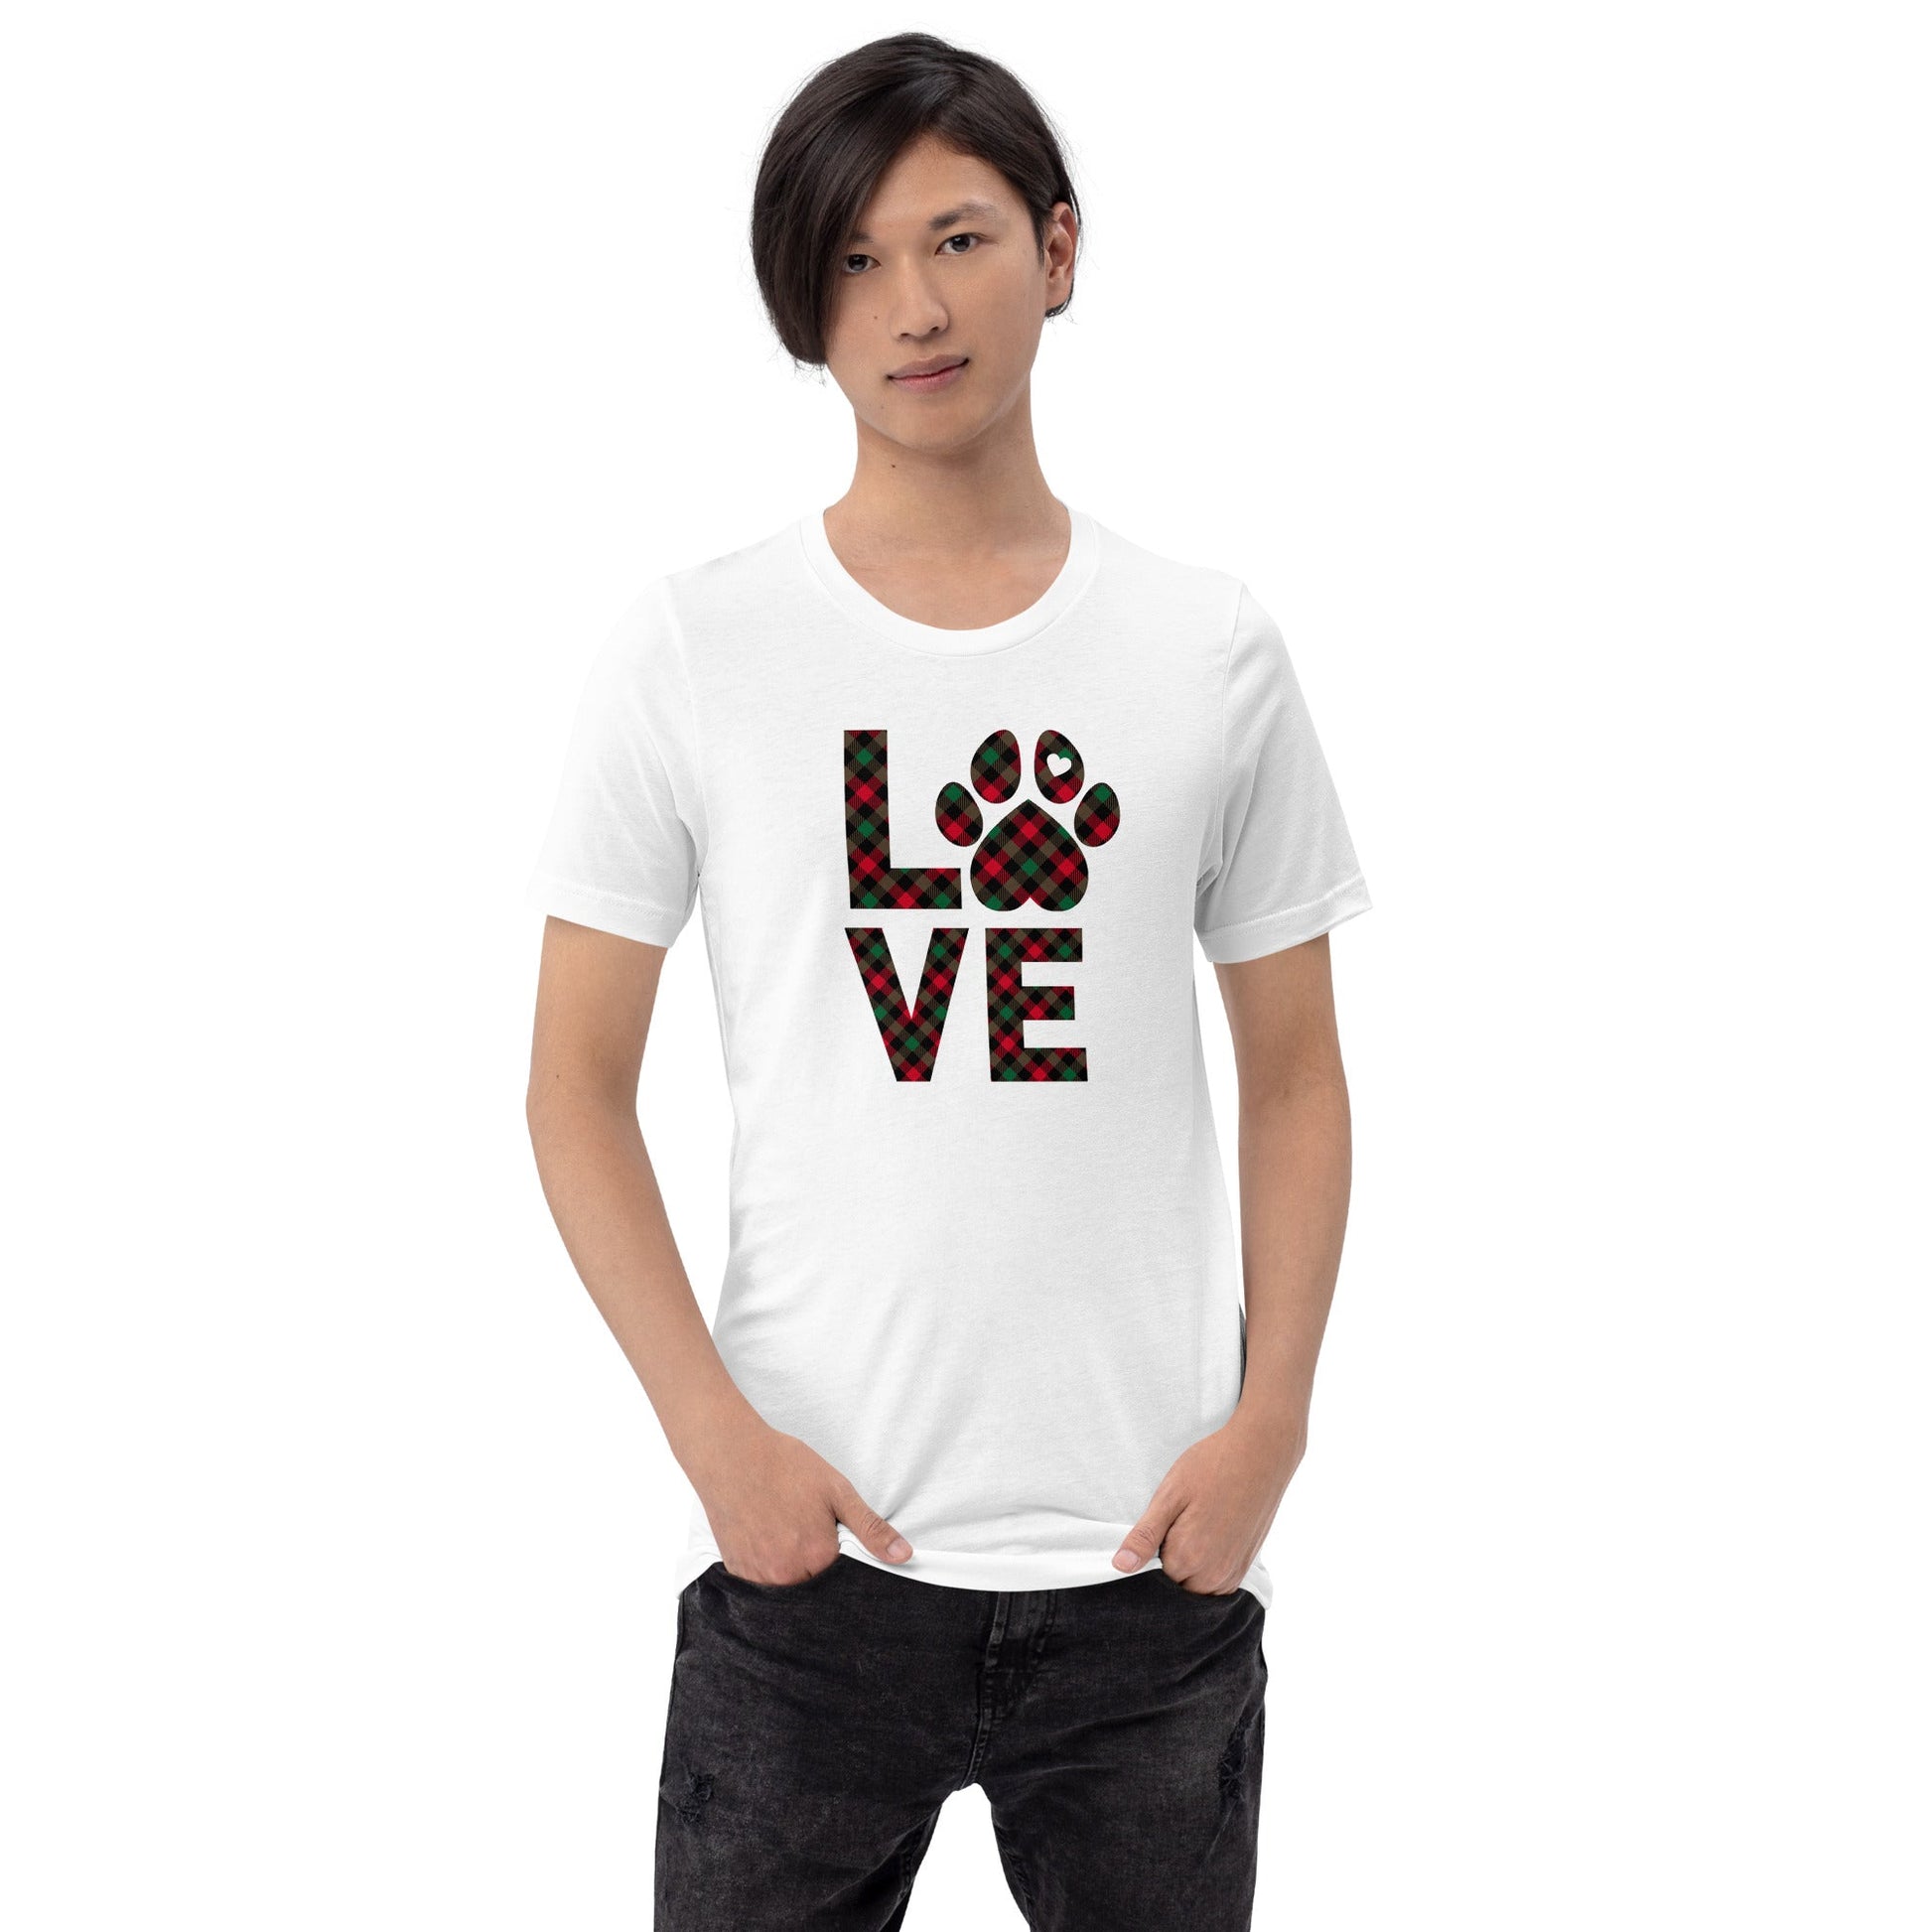 Dog LOVE Christmas T-Shirt - DoggyLoveandMore